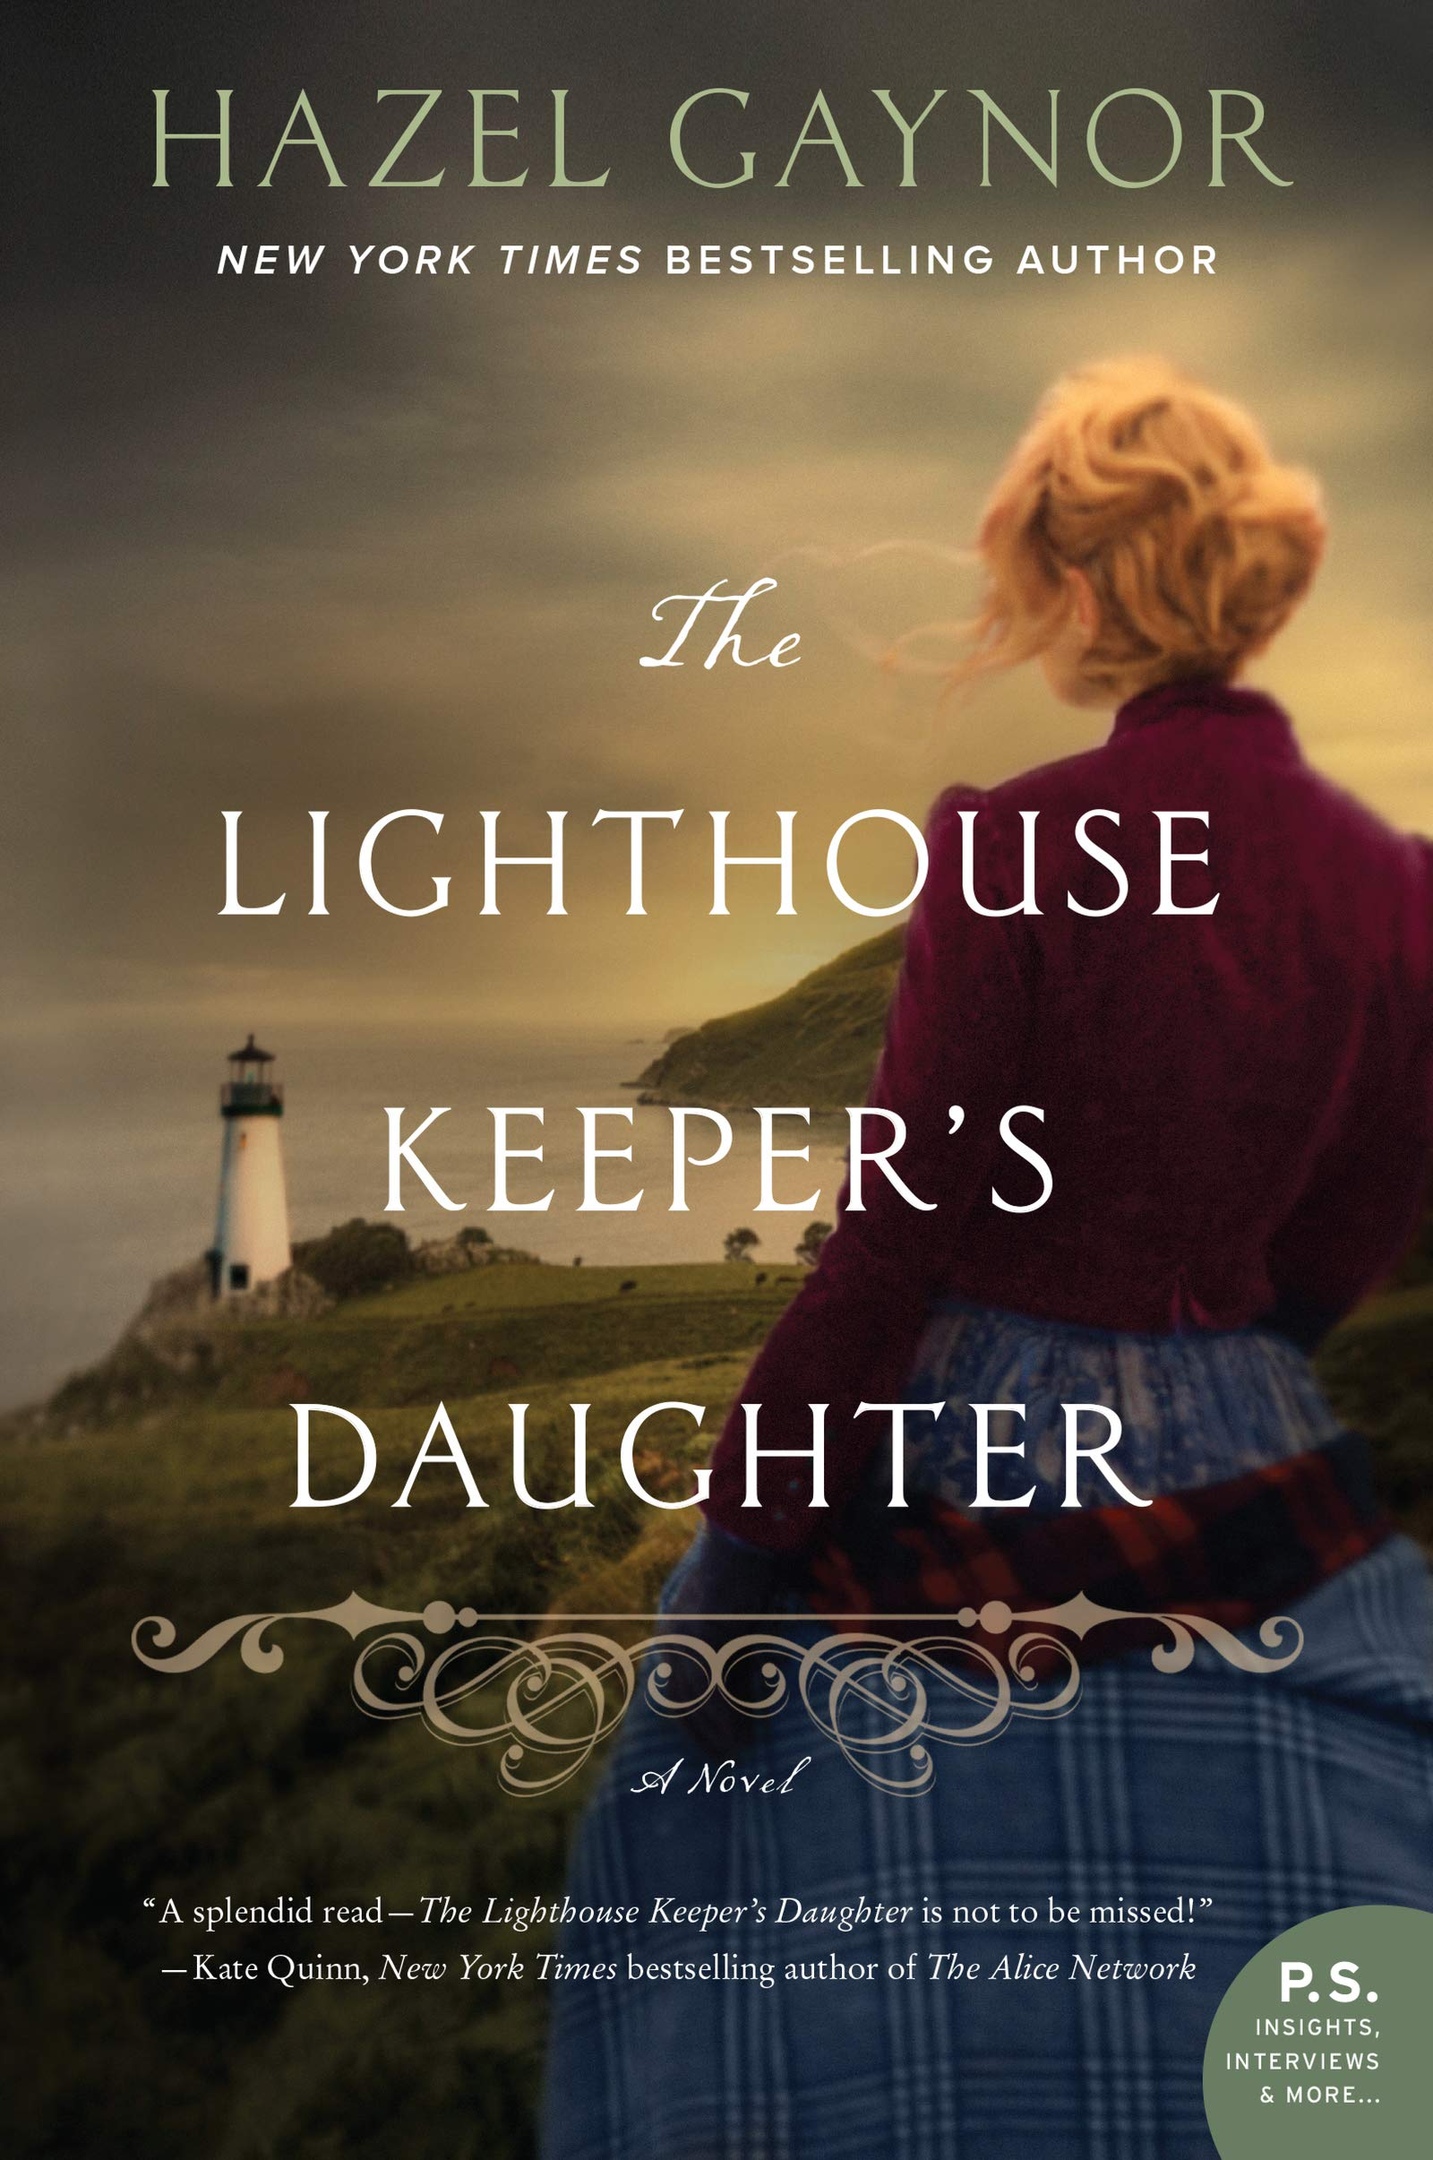 Hazel Gaynor – The Lighthouse Keeper’s Daughter